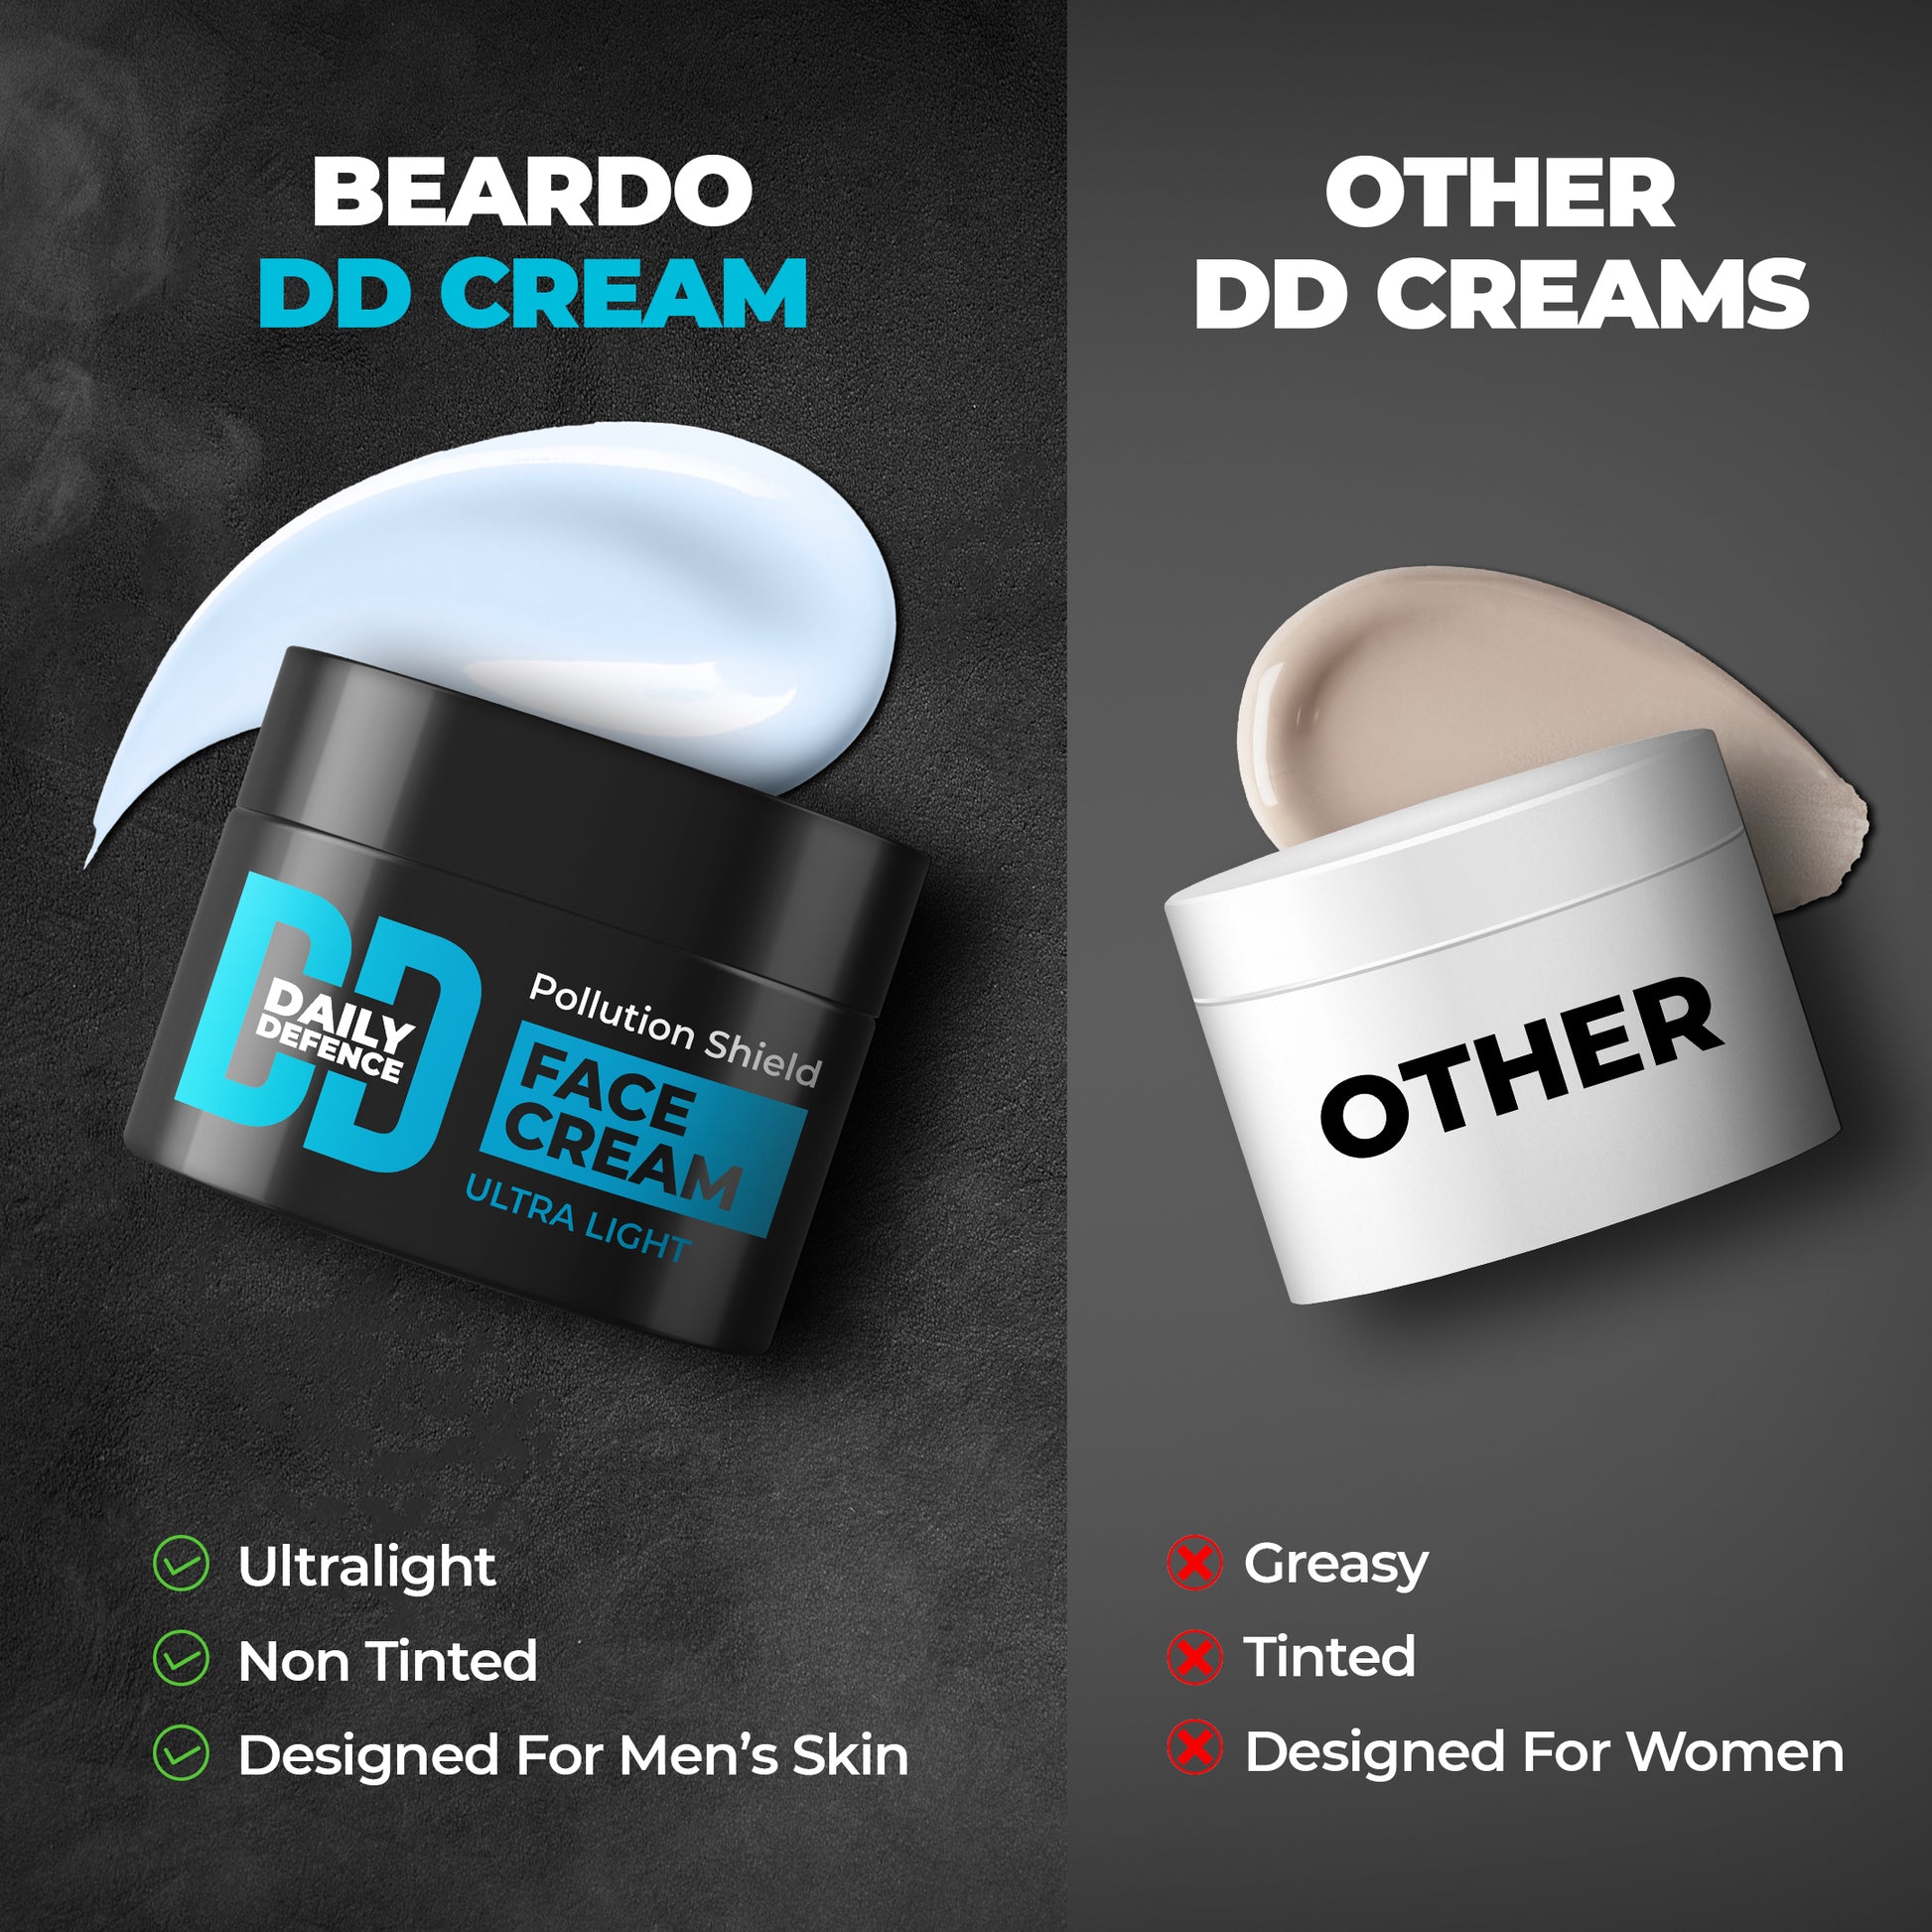 Beardo Daily Defence Face Cream